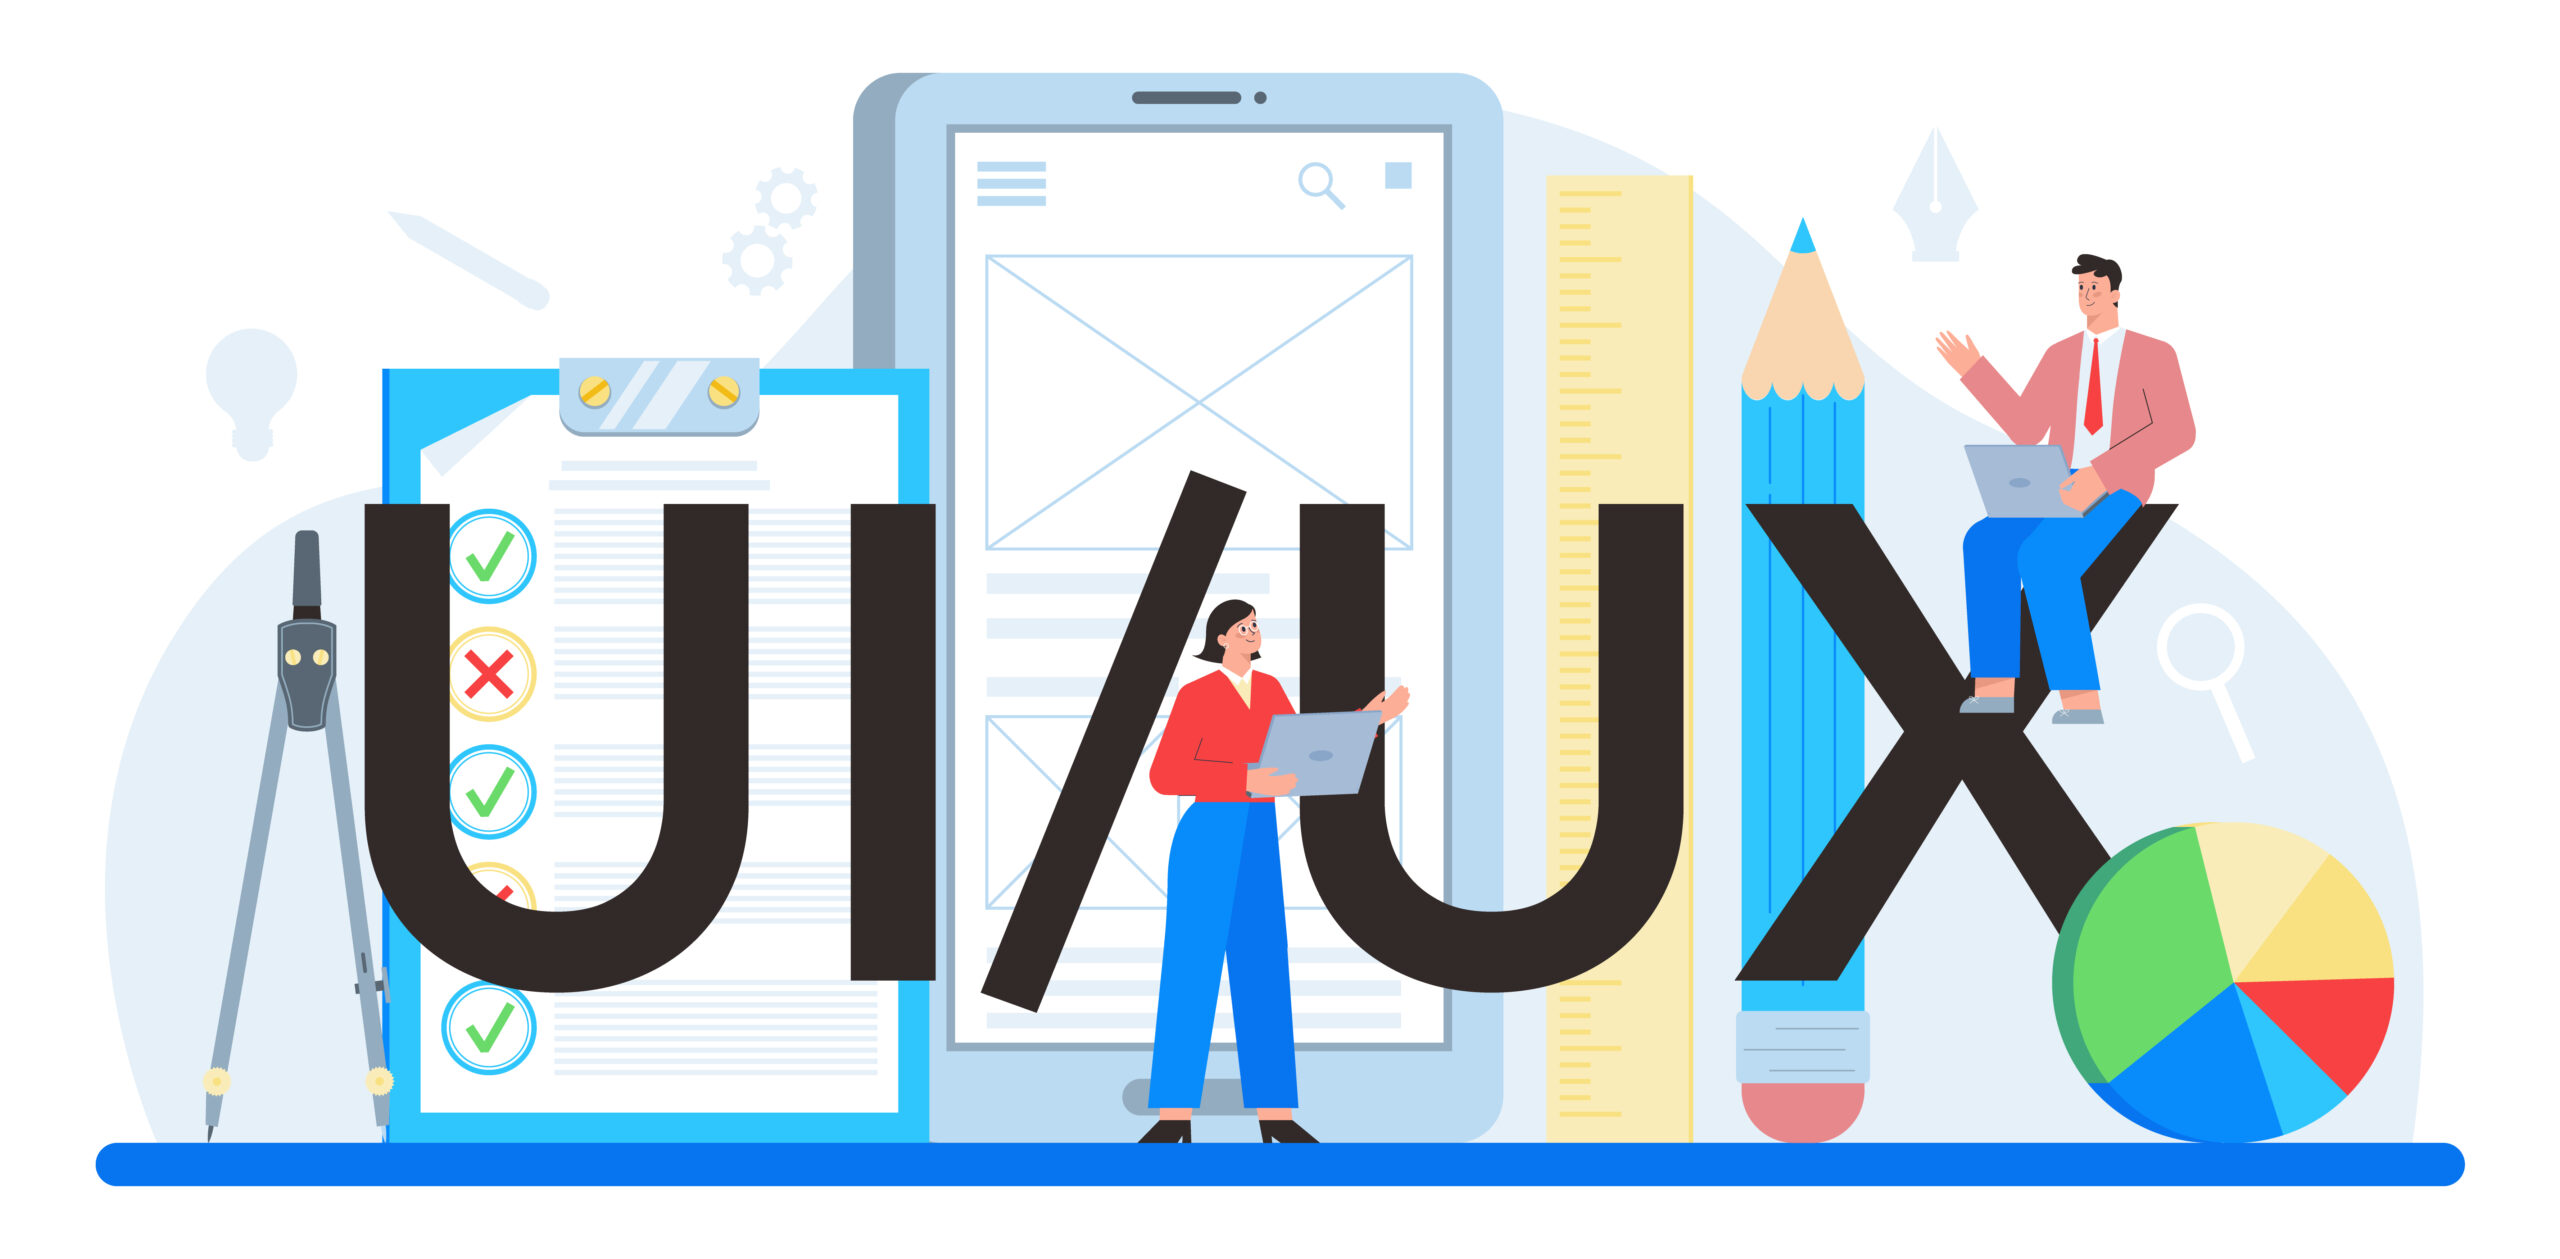 UX UI typographic header. App interface improvement. User interface design and user experience development. Modern technology concept. Flat vector illustration